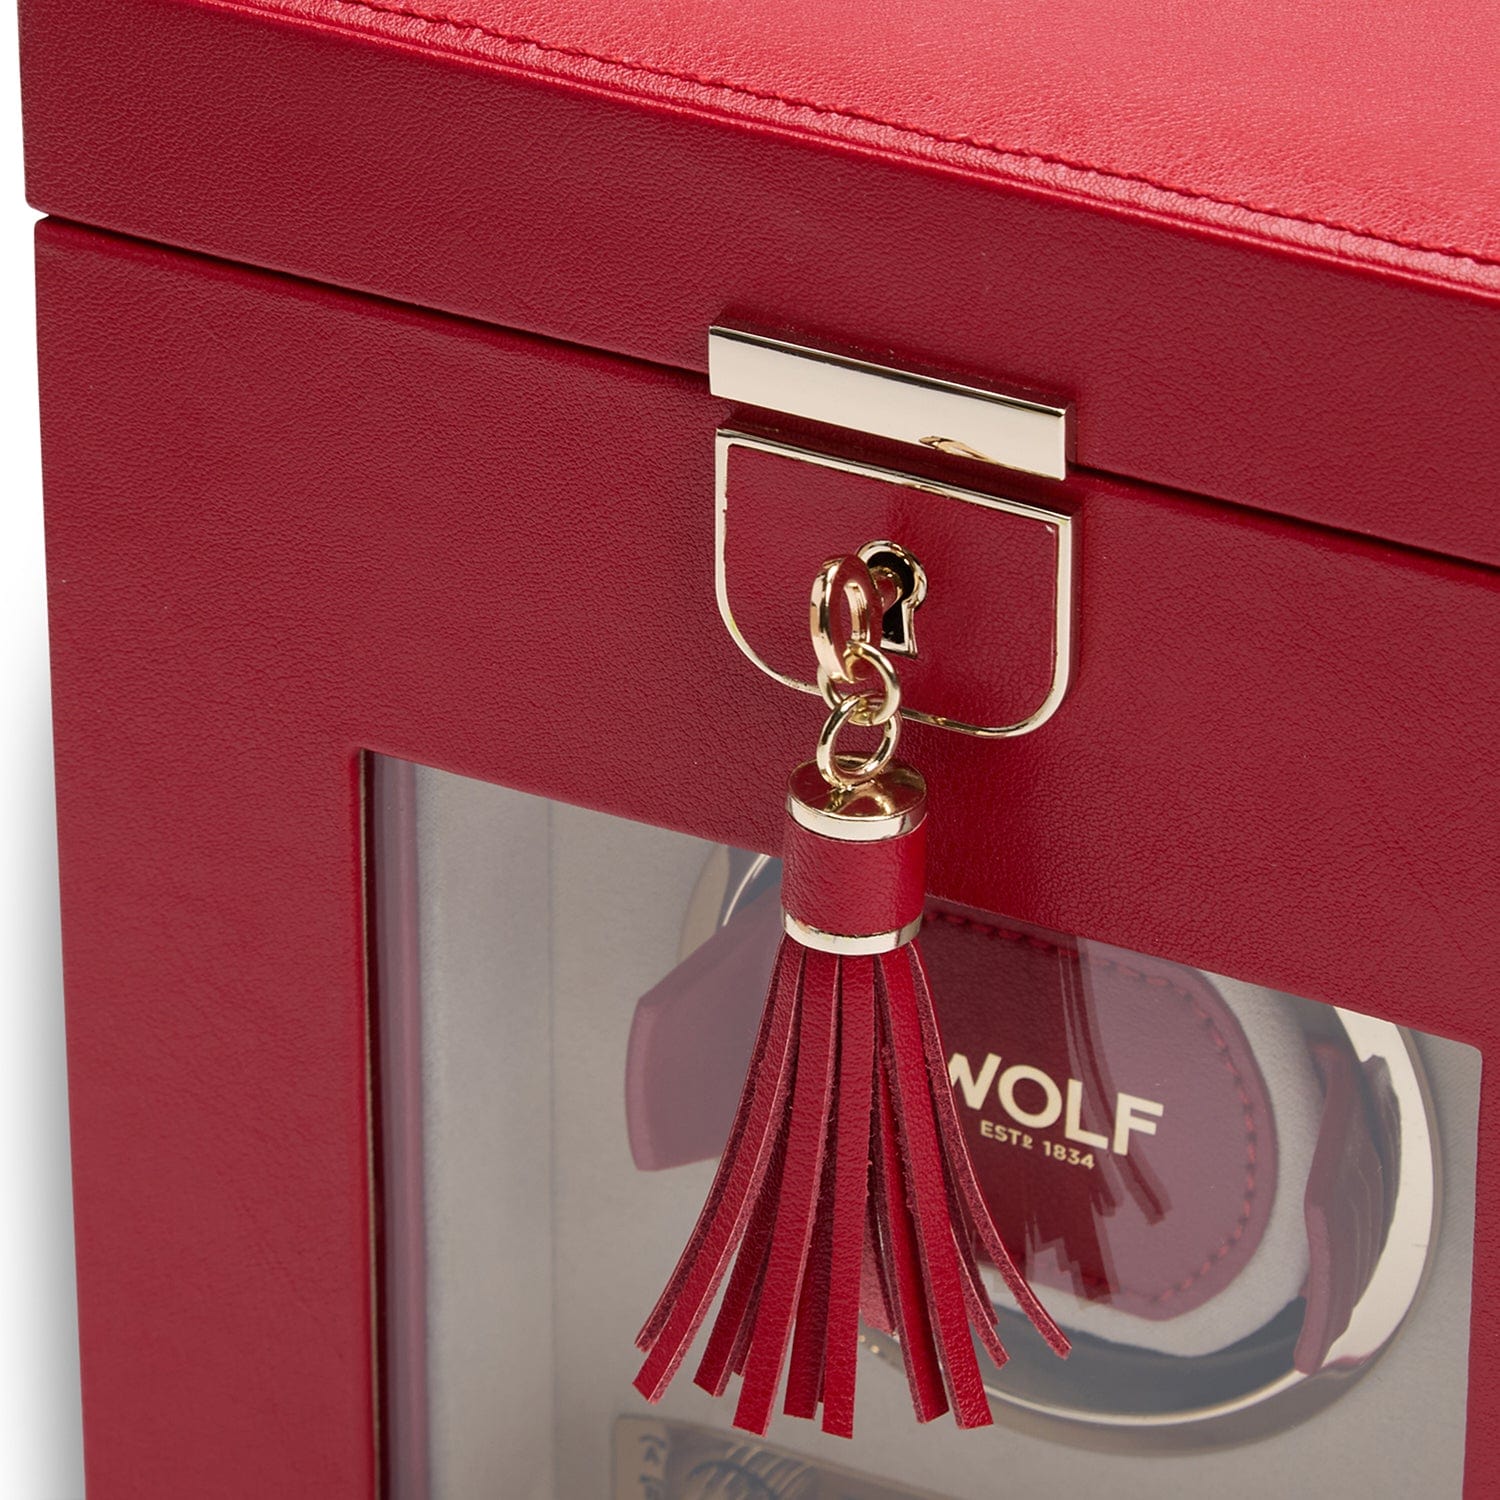 Wolf1834 Watch Winder Palermo Single Watch Winder with Jewelry Storage-Red